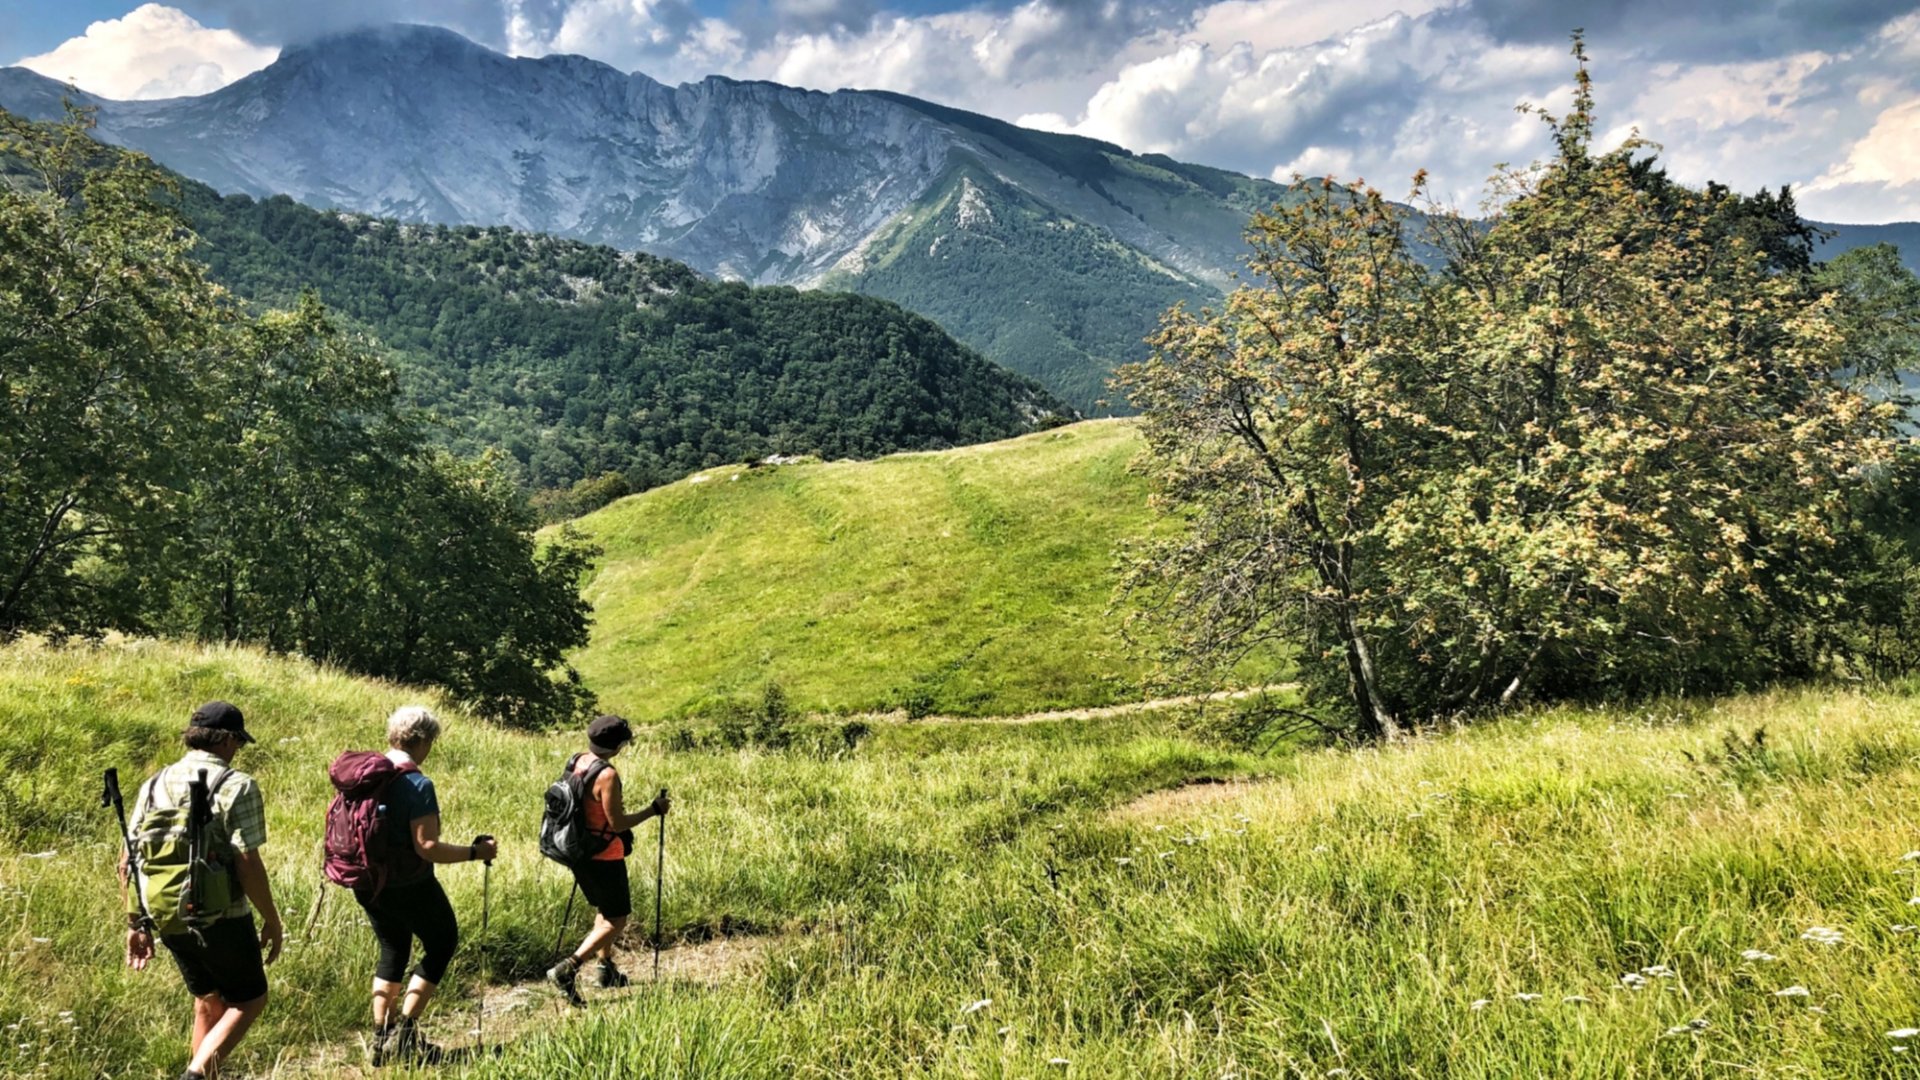 Trekking at Alpeggio del Puntato in Garfagnana, Tuscany